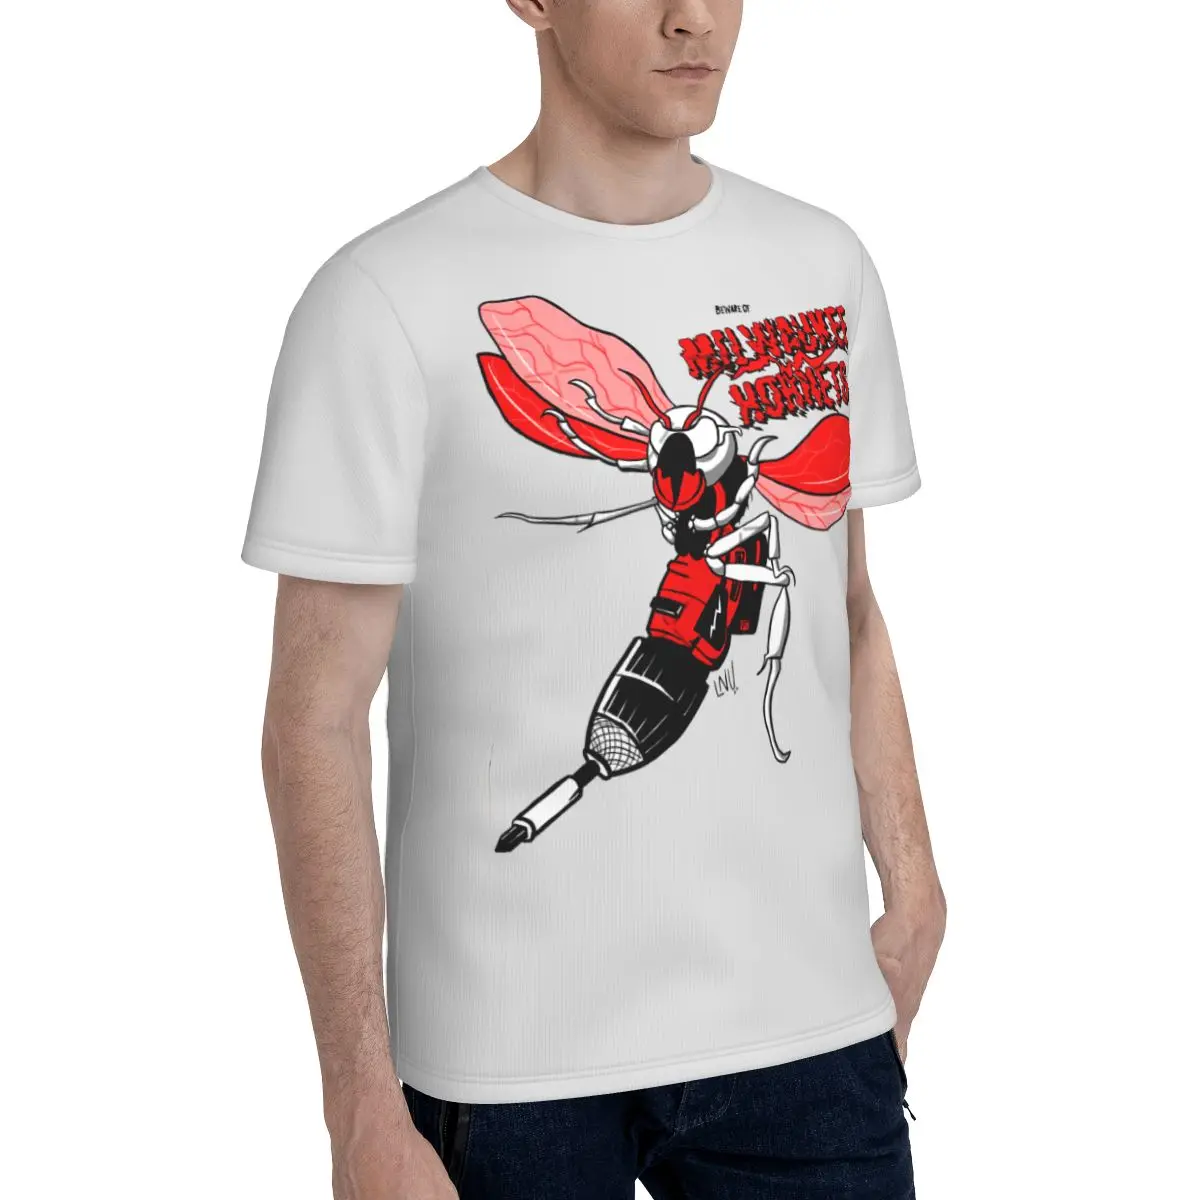 Promo Baseball Milwaukees Tools Hornets T-shirt Graphic Vintage Men's T Shirt Print Nerdy R258 Tops Tees European Size